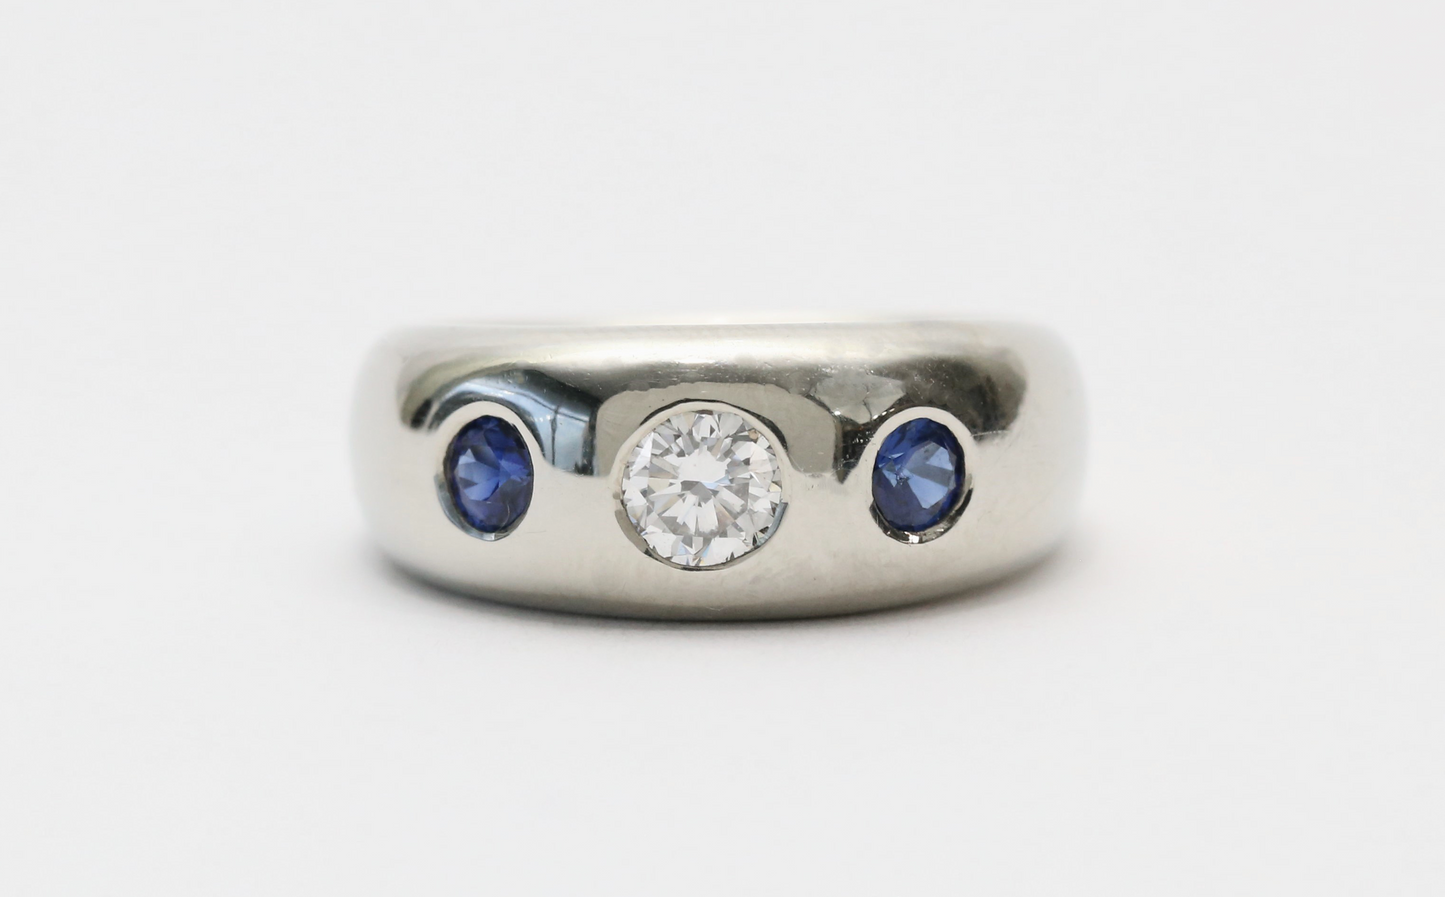 18k White Gold Diamond & Sapphire Dome Ring, Size 4.5 - 12.1g